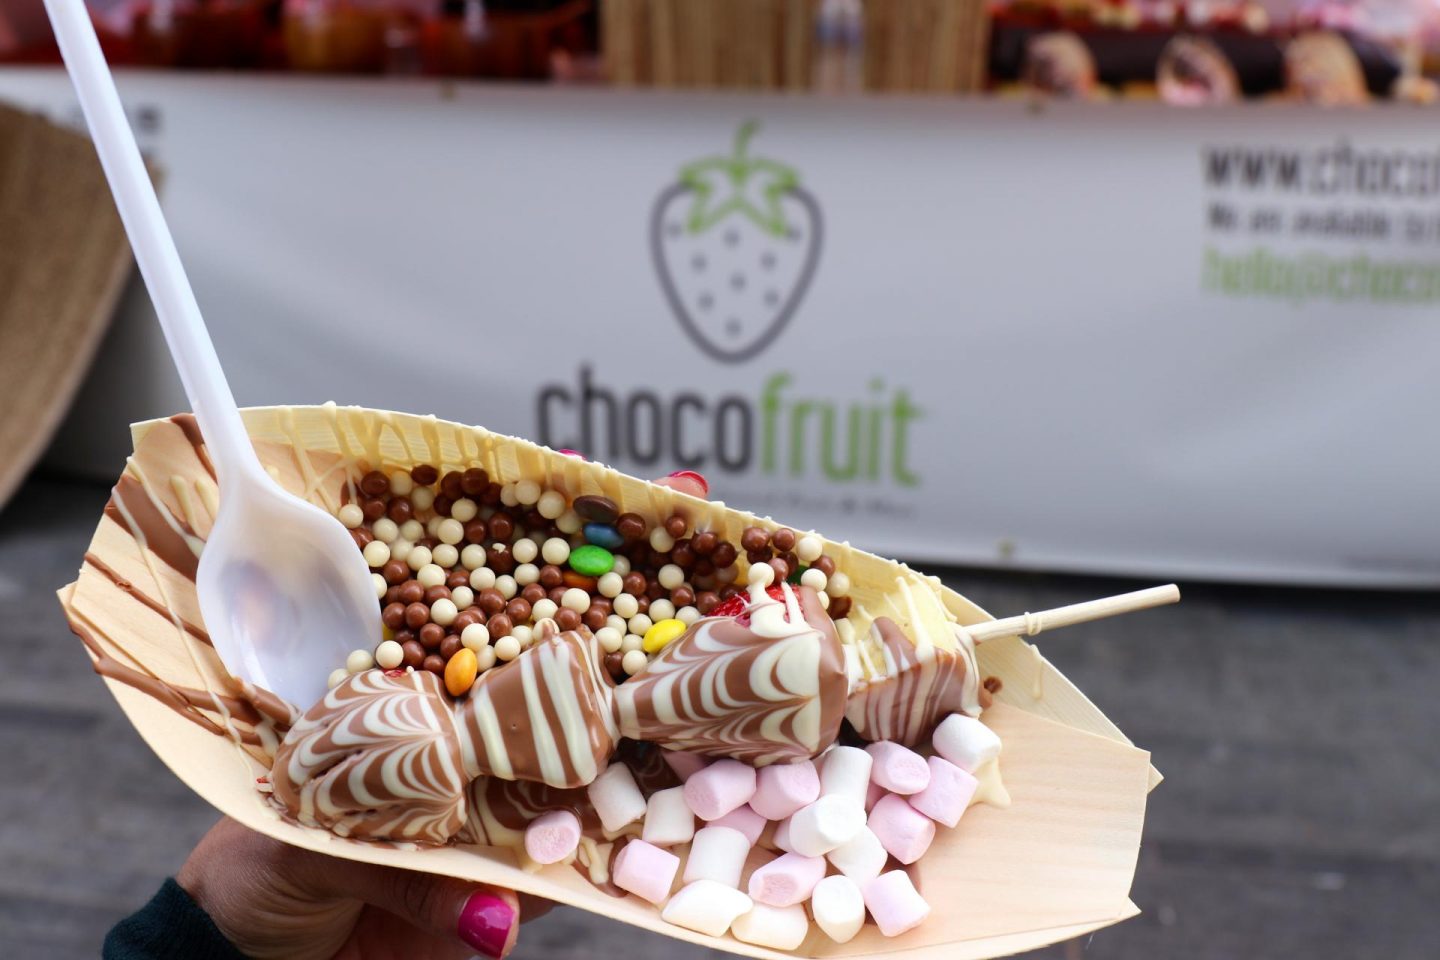 Sweet Saturday: ChocoFruit Chocolate Covered Fruit